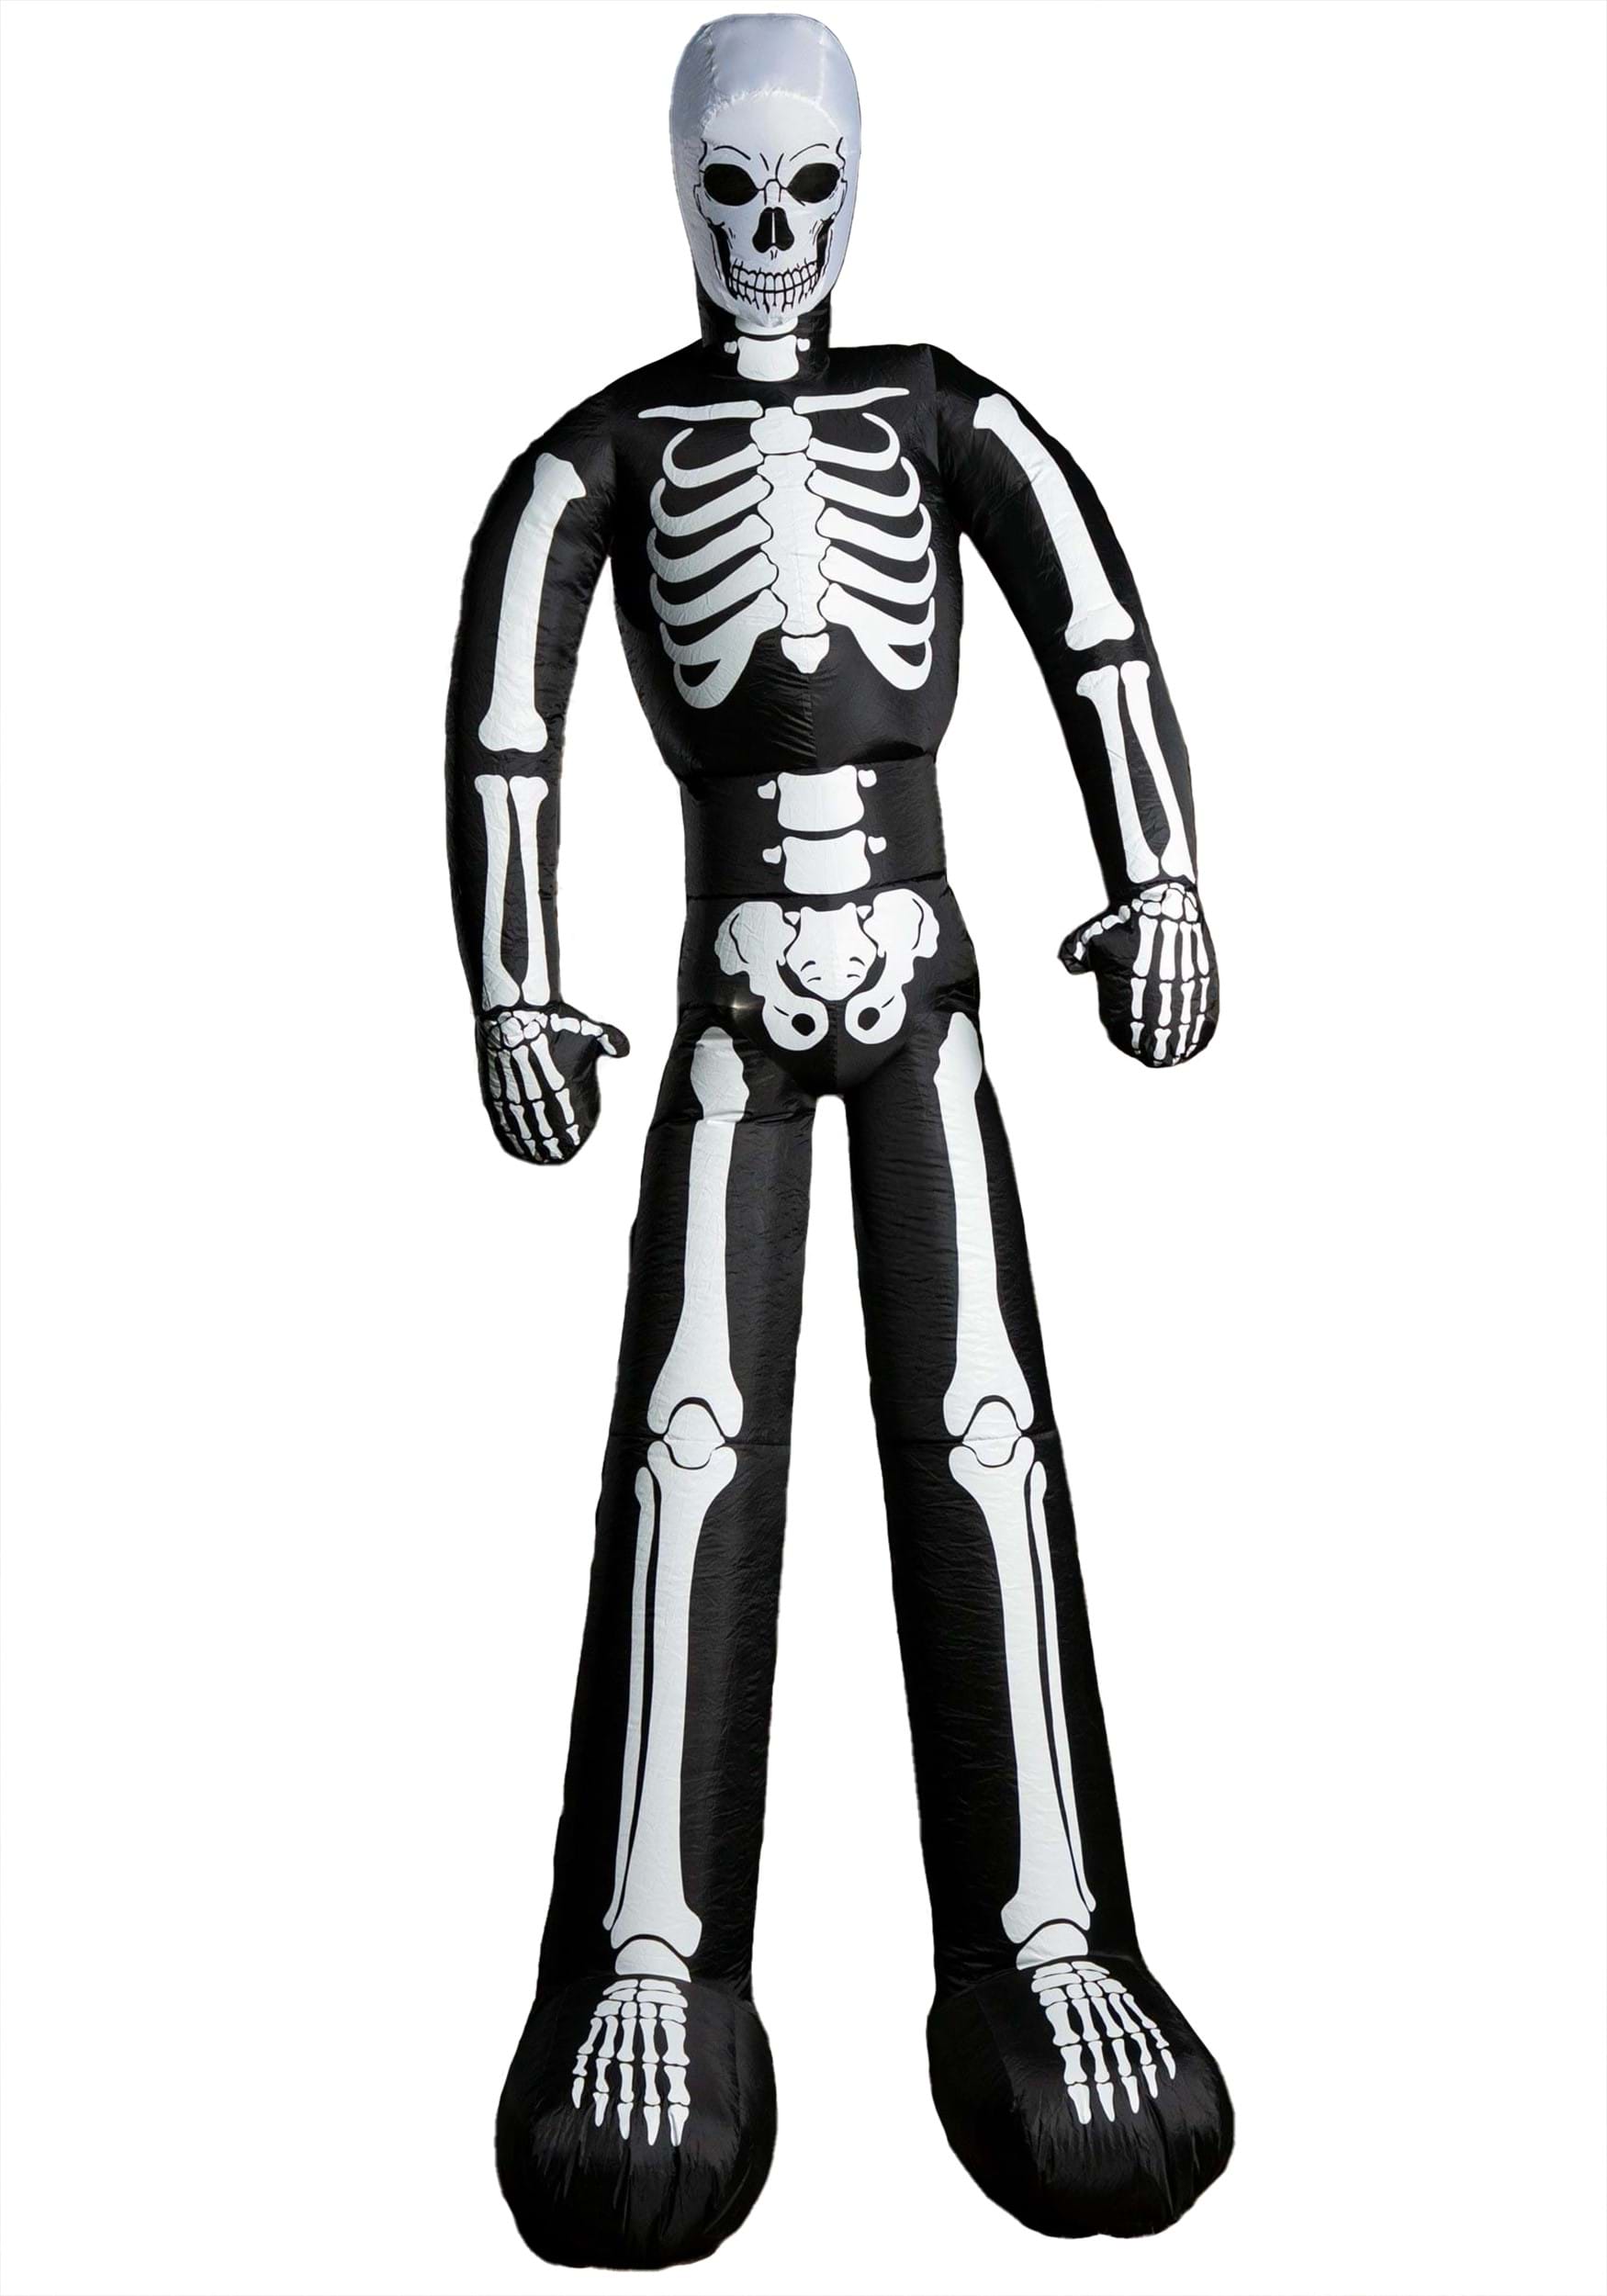 12 Foot Inflatable Skeleton Prop | Inflatable Halloween Decorations